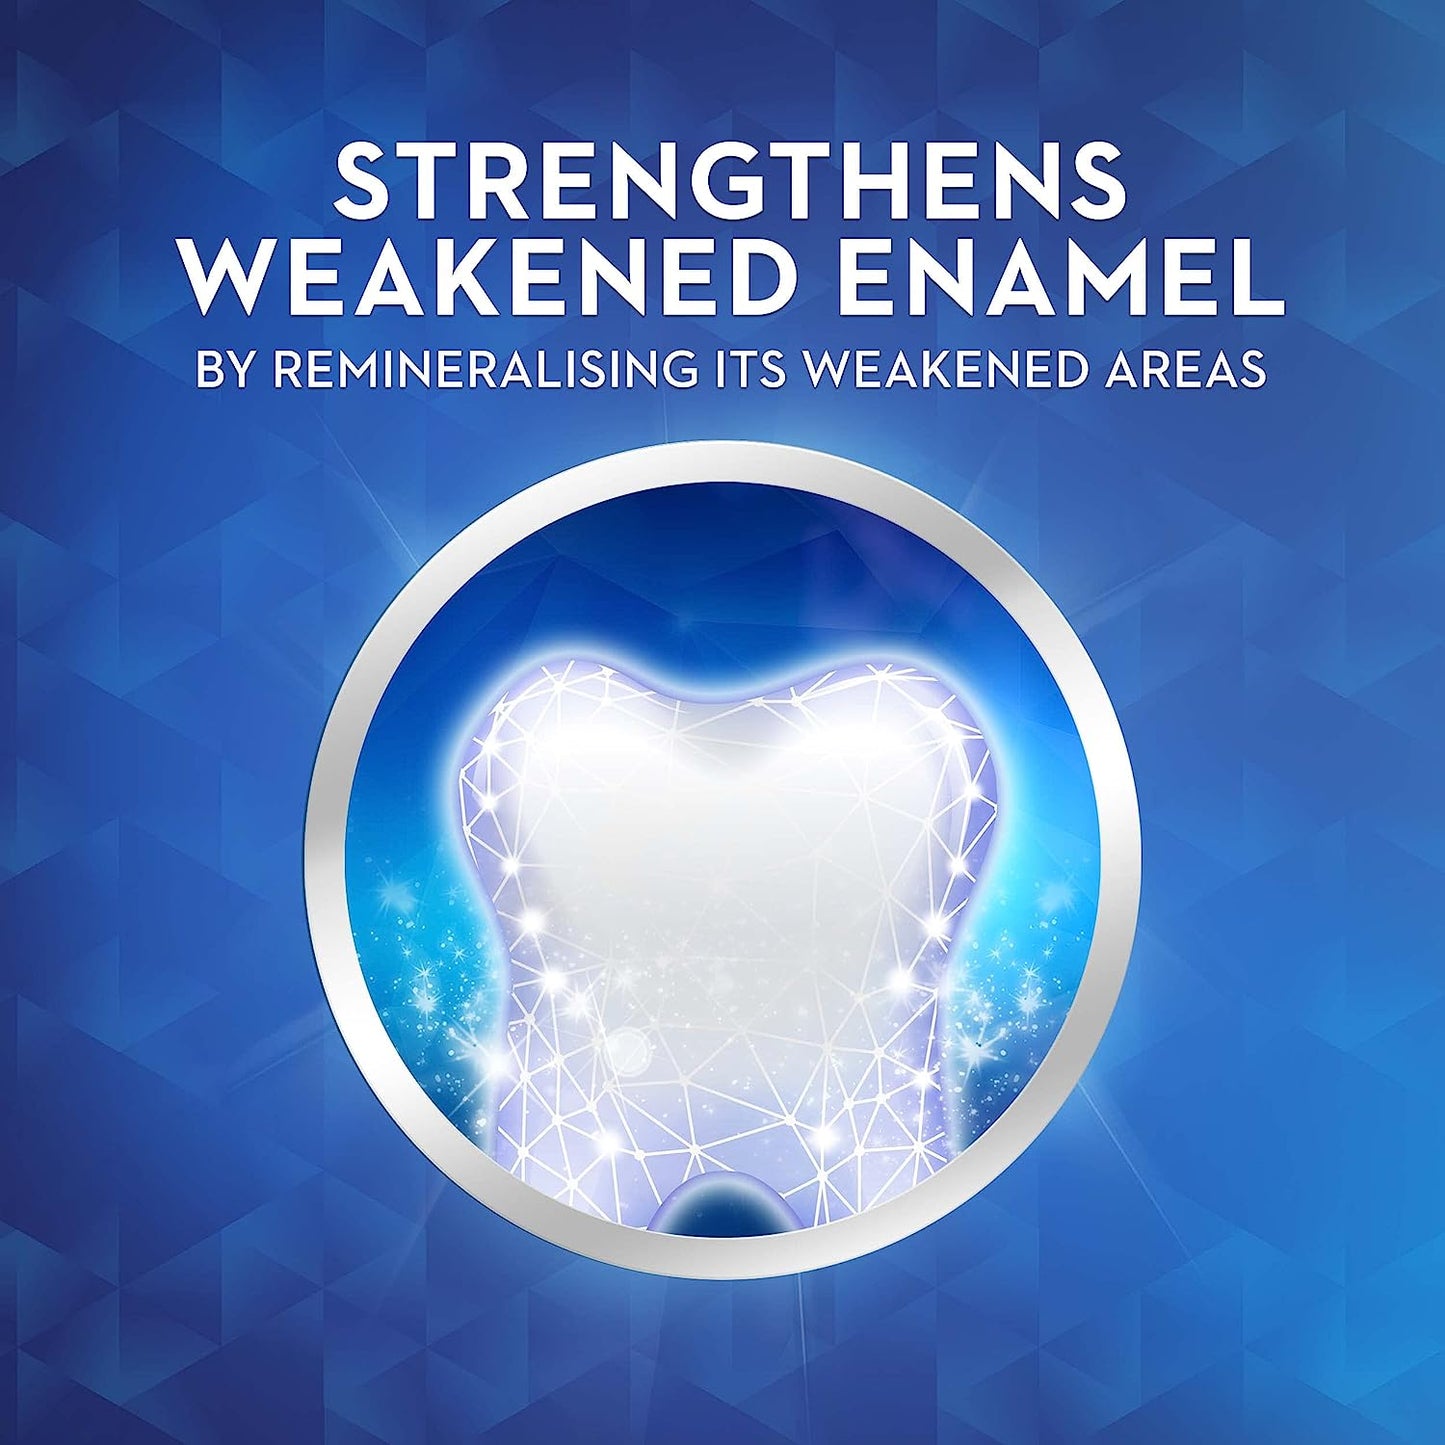 Oral B Toothpaste 3D White Strengthen Enamel 110g